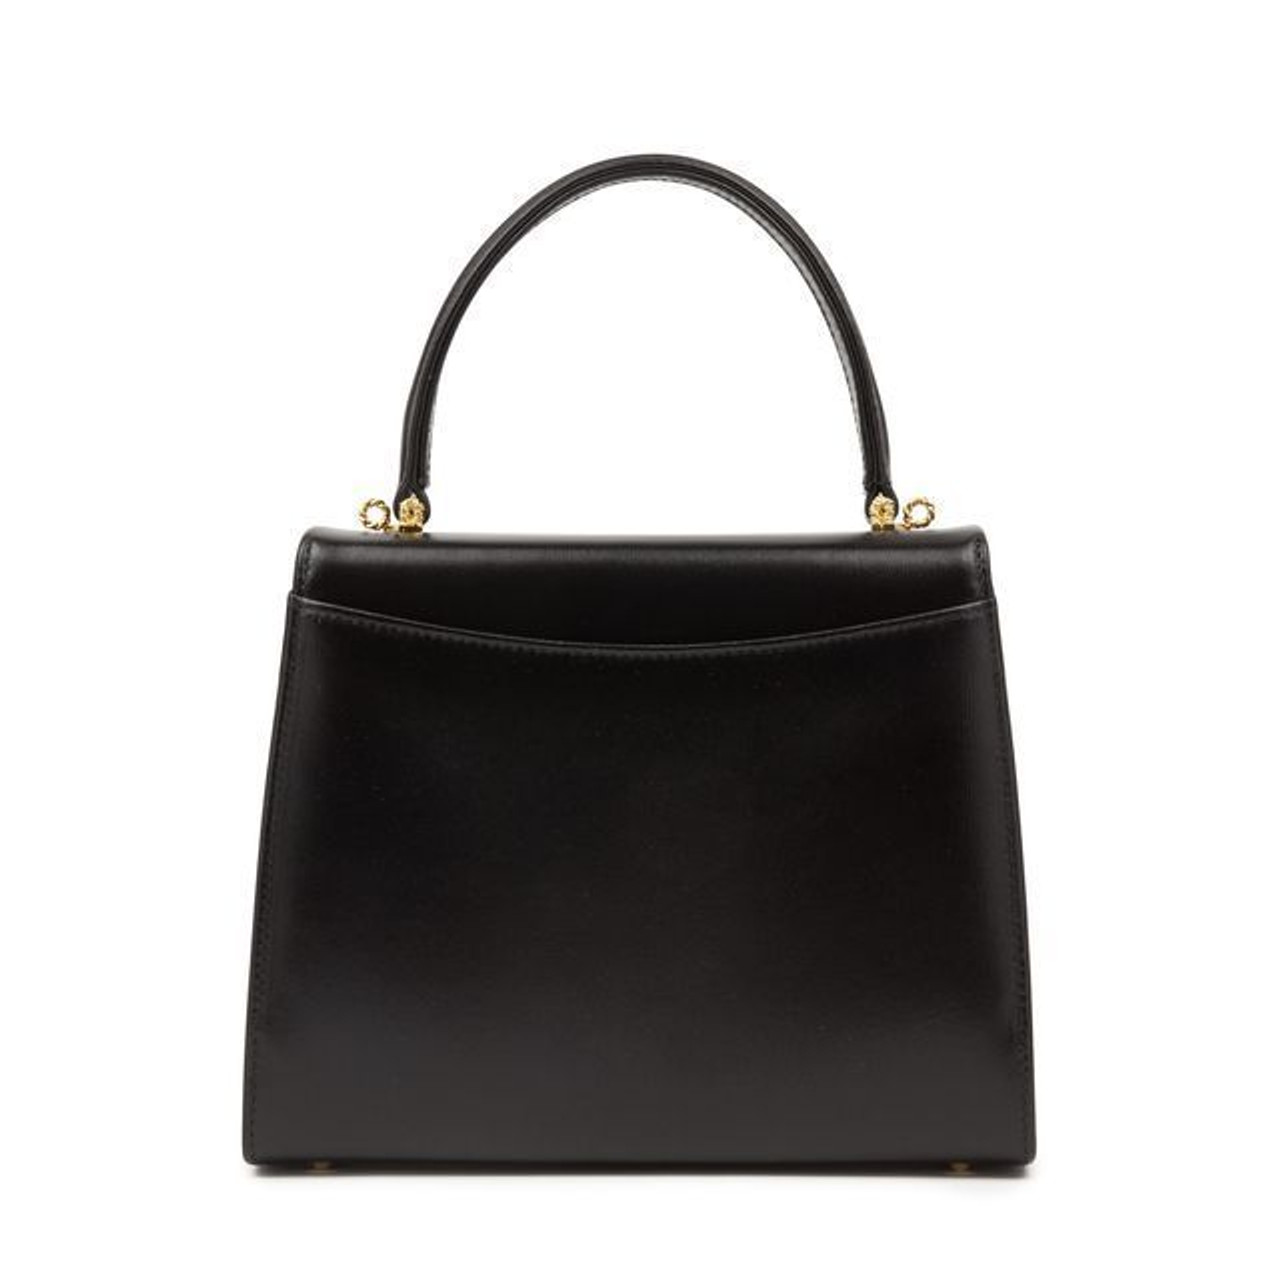 Vintage CLASSIC black leather handbag bag LAUNER LONDON top